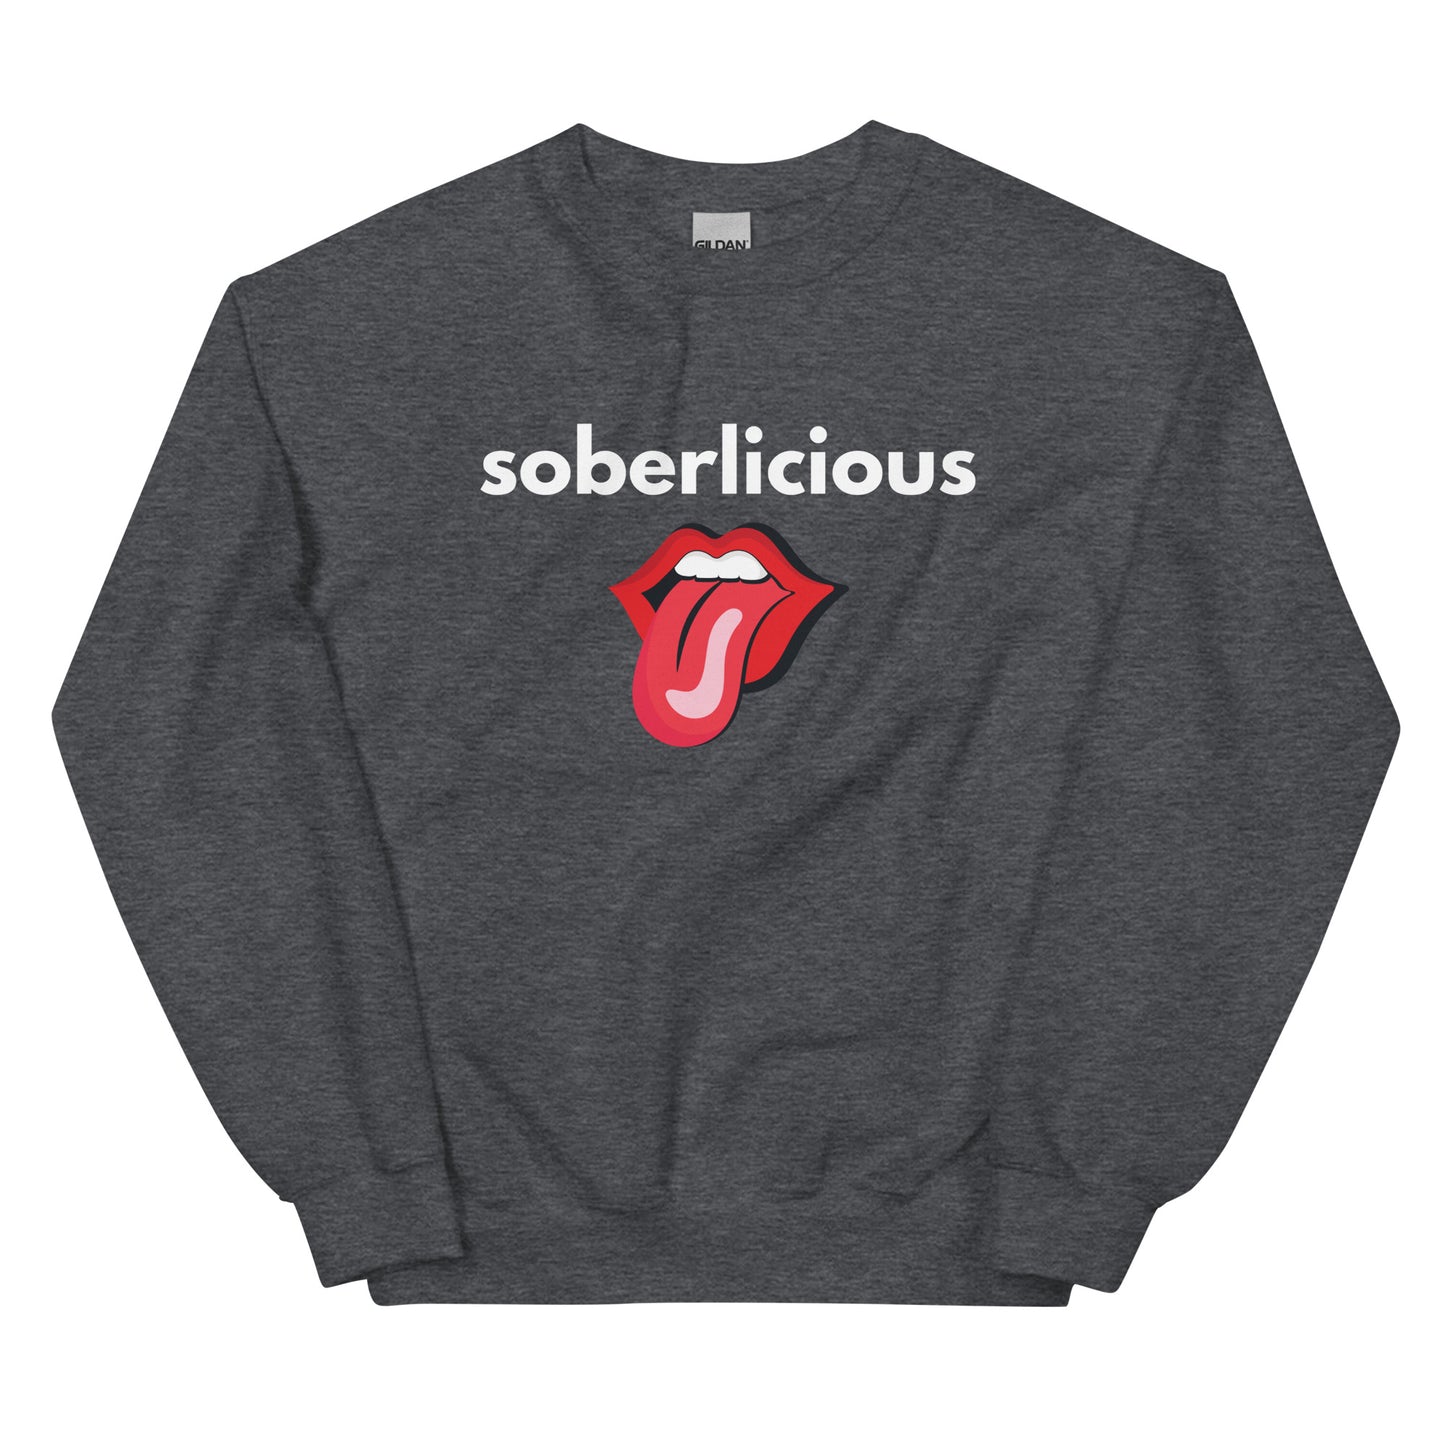 Soberlicious Tongue Sweatshirt